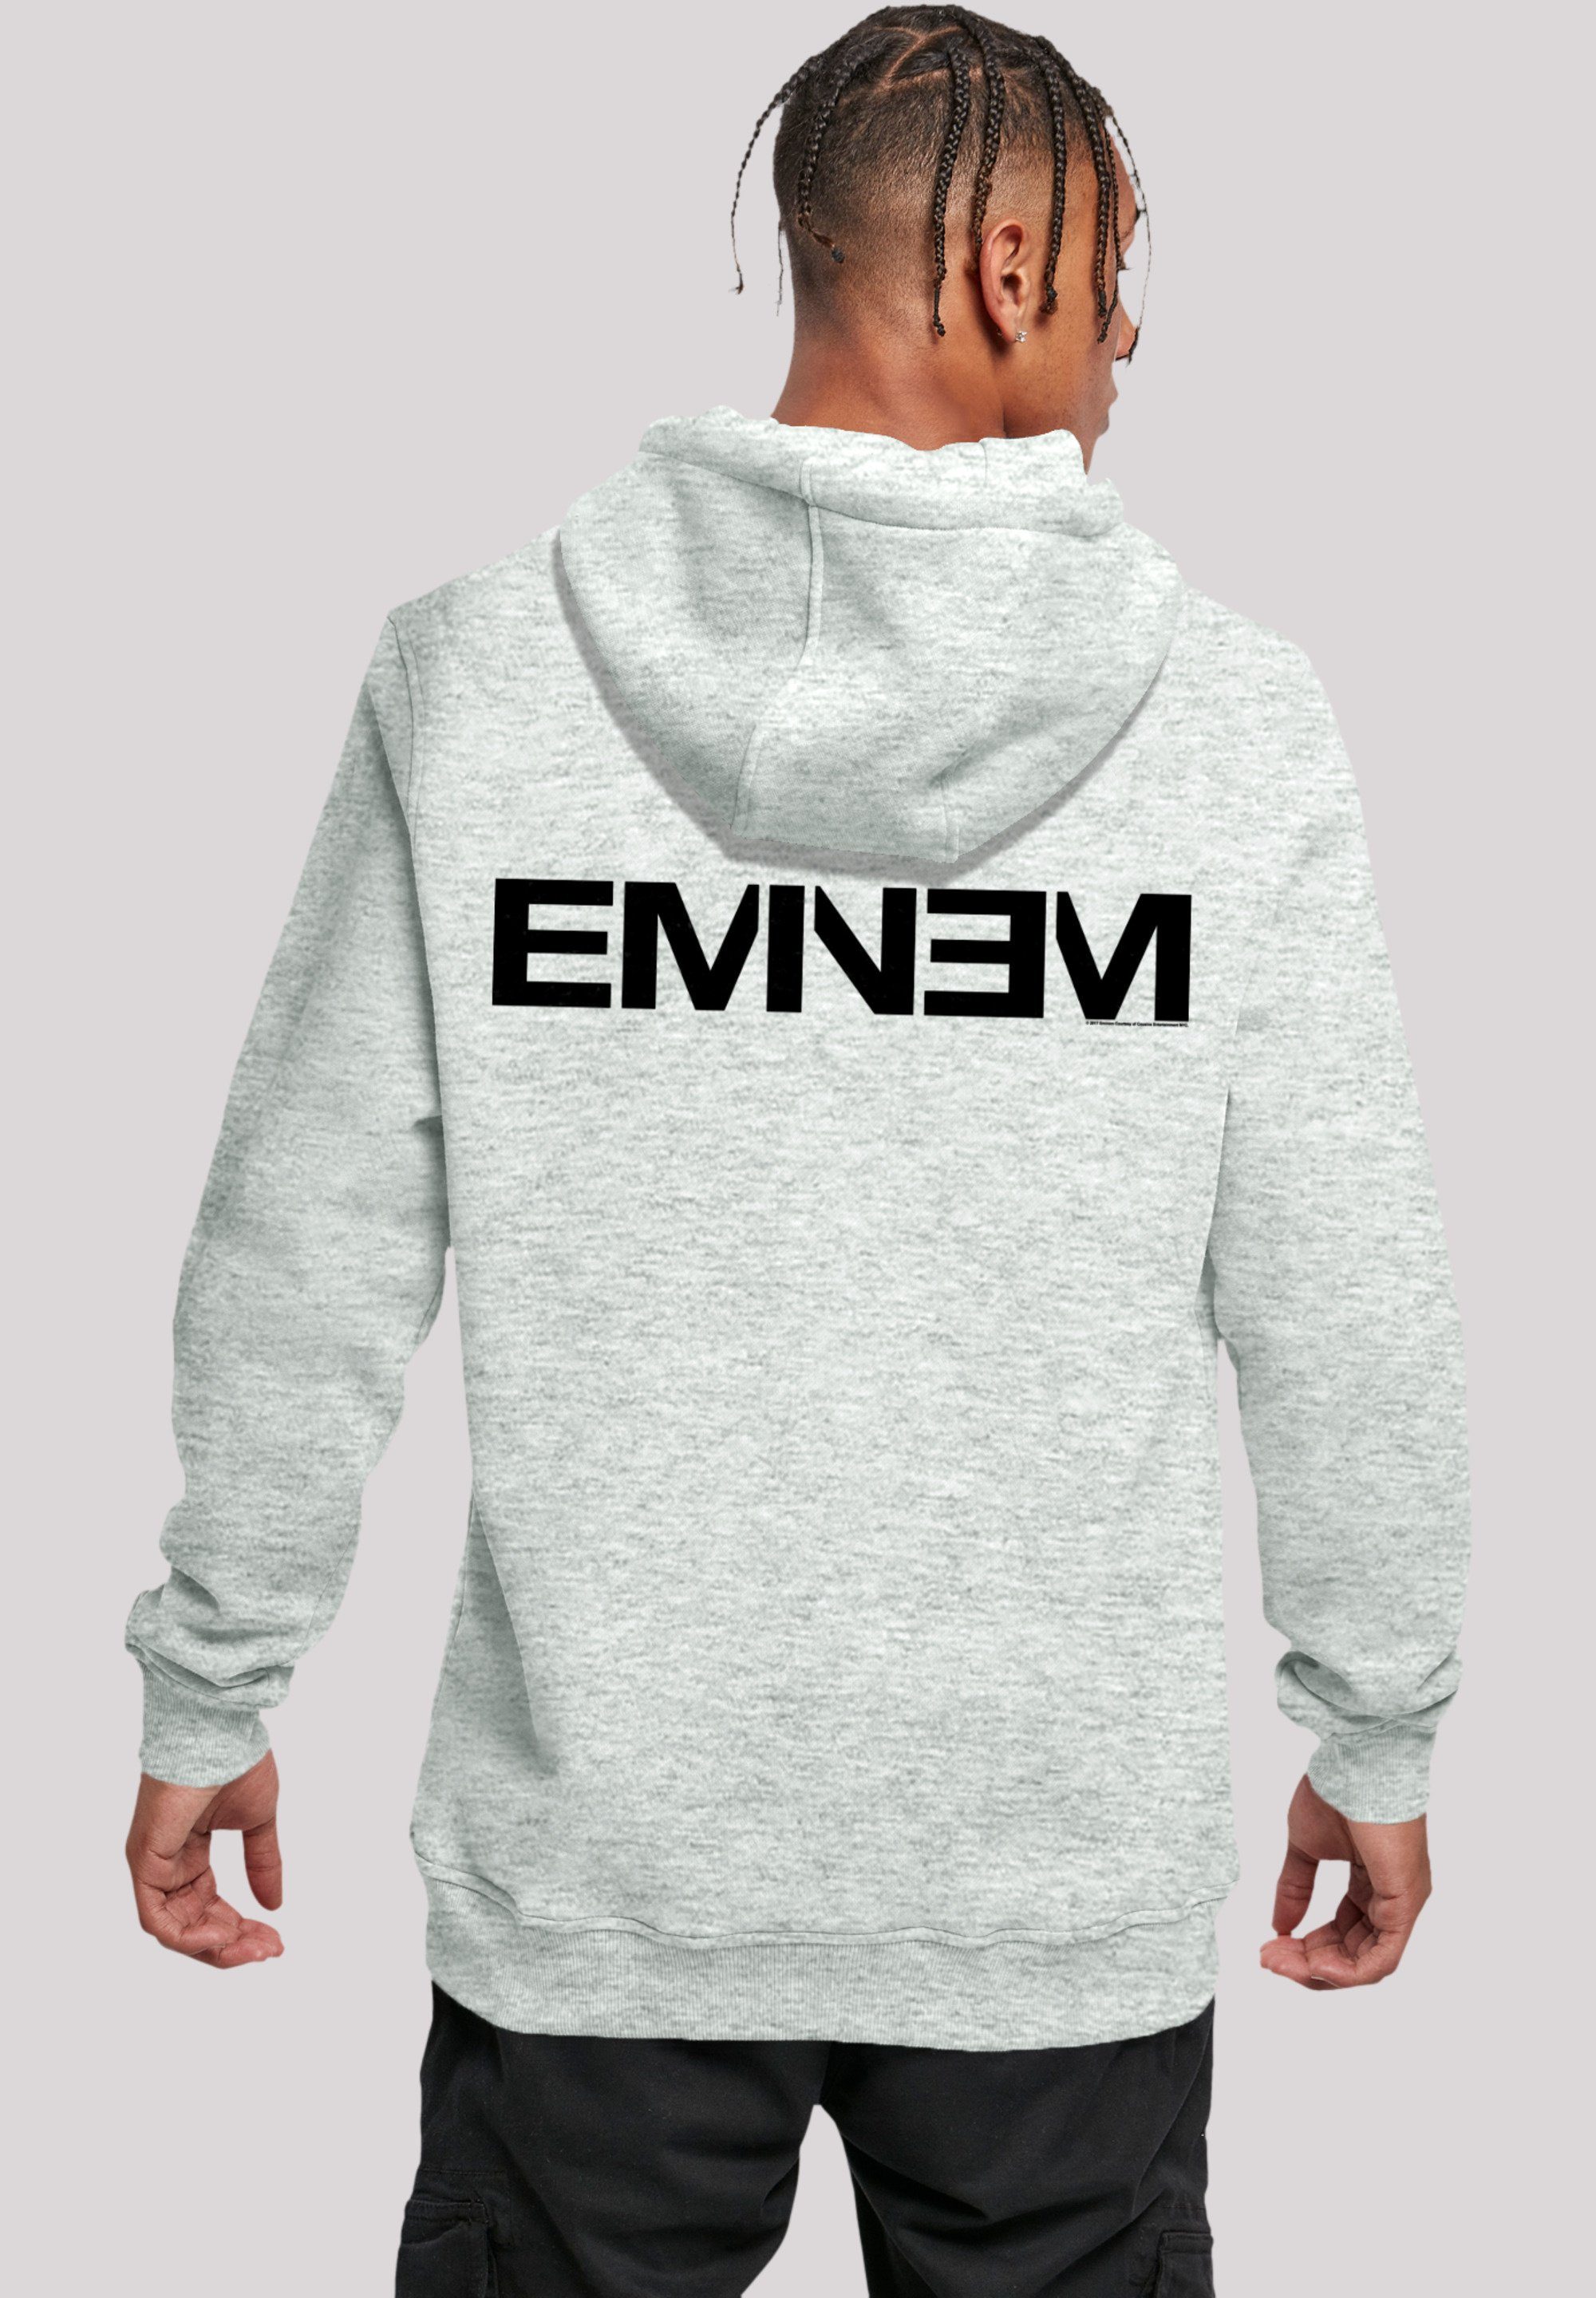 Premium Hoodie Qualität, F4NT4STIC Band, grey Logo Eminem heather Music Rap